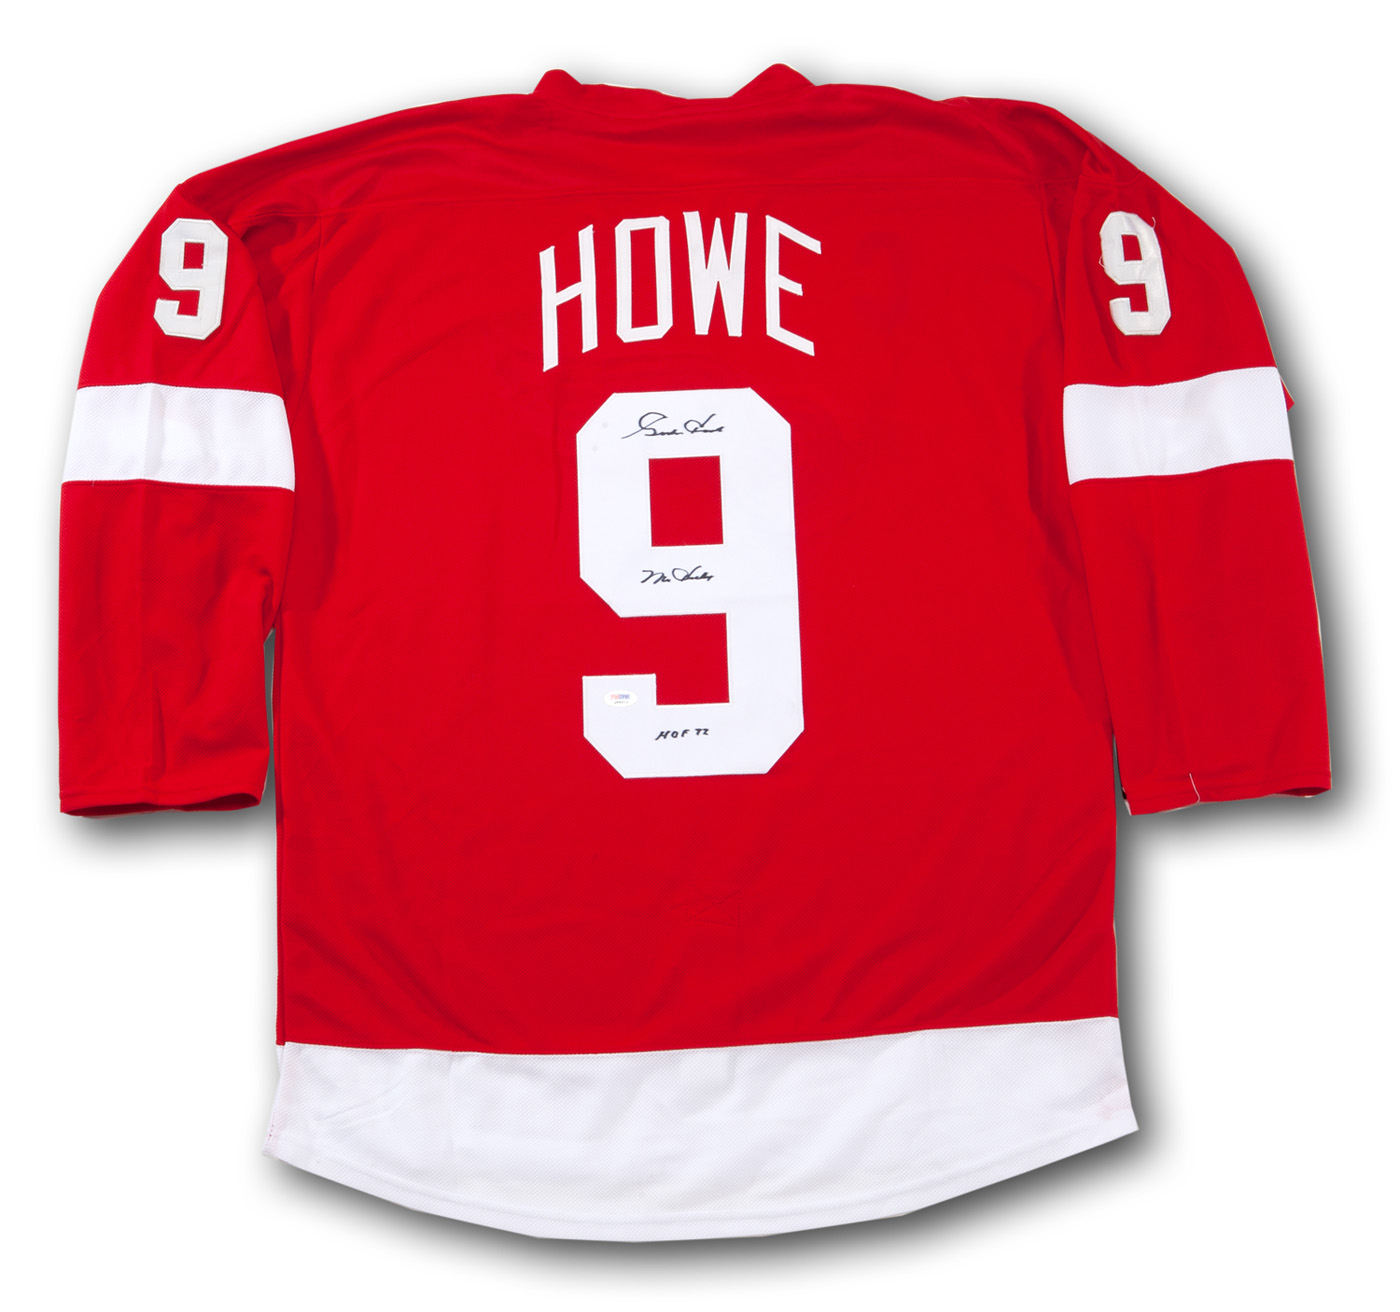 Gordie Howe Signed Red Wings Jersey Inscribed Mr. Hockey (PSA